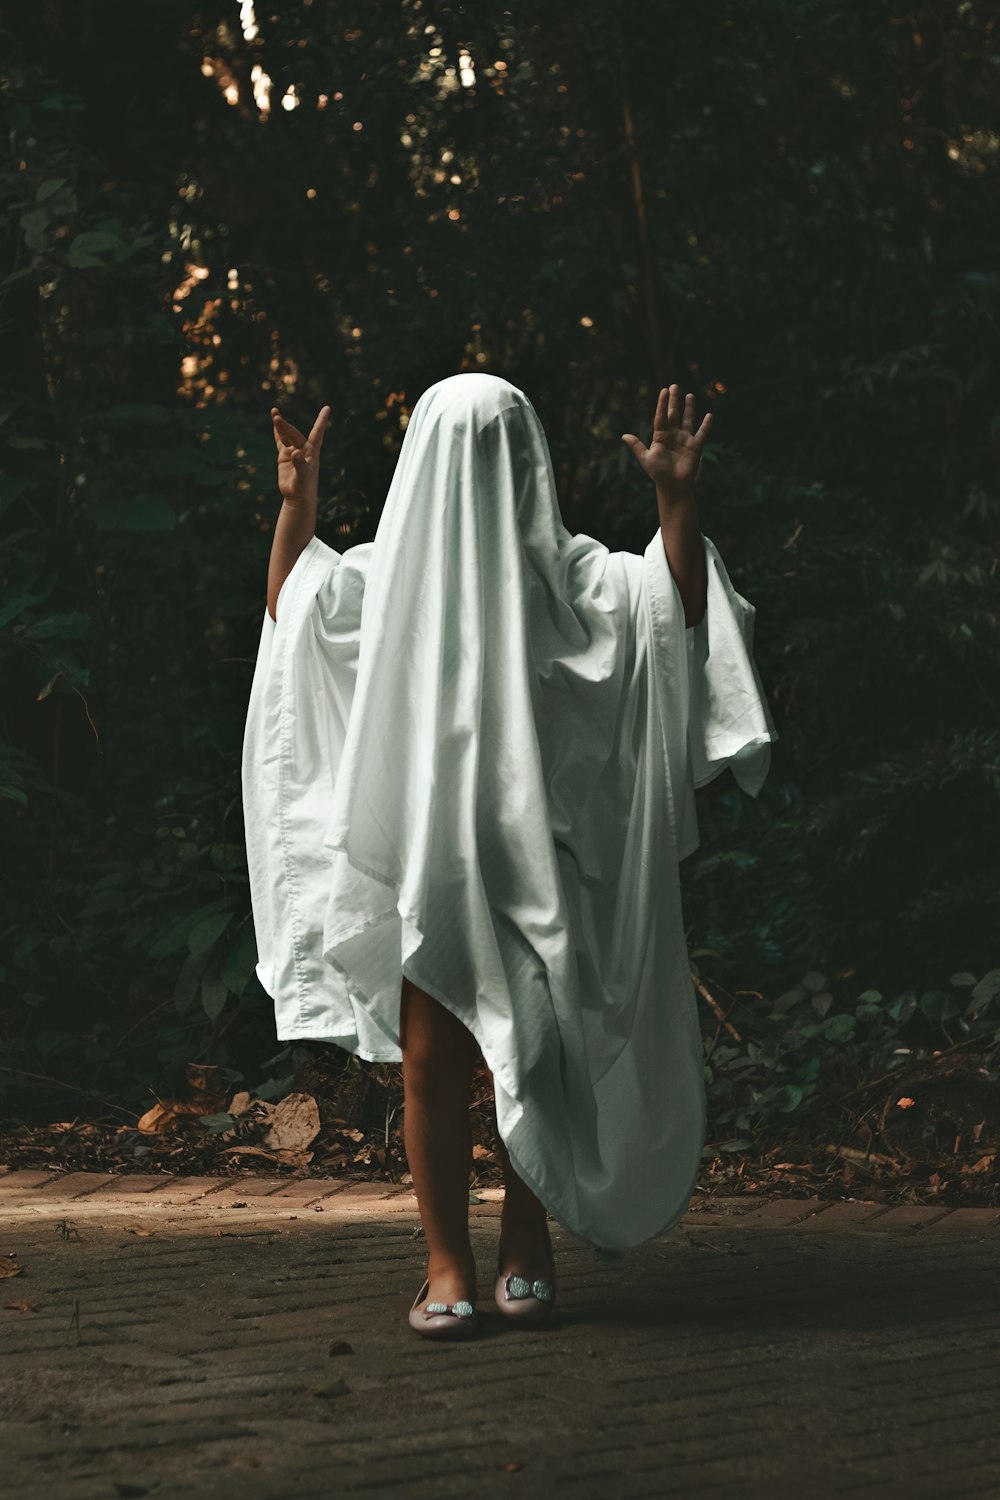 a person wearing a white robe